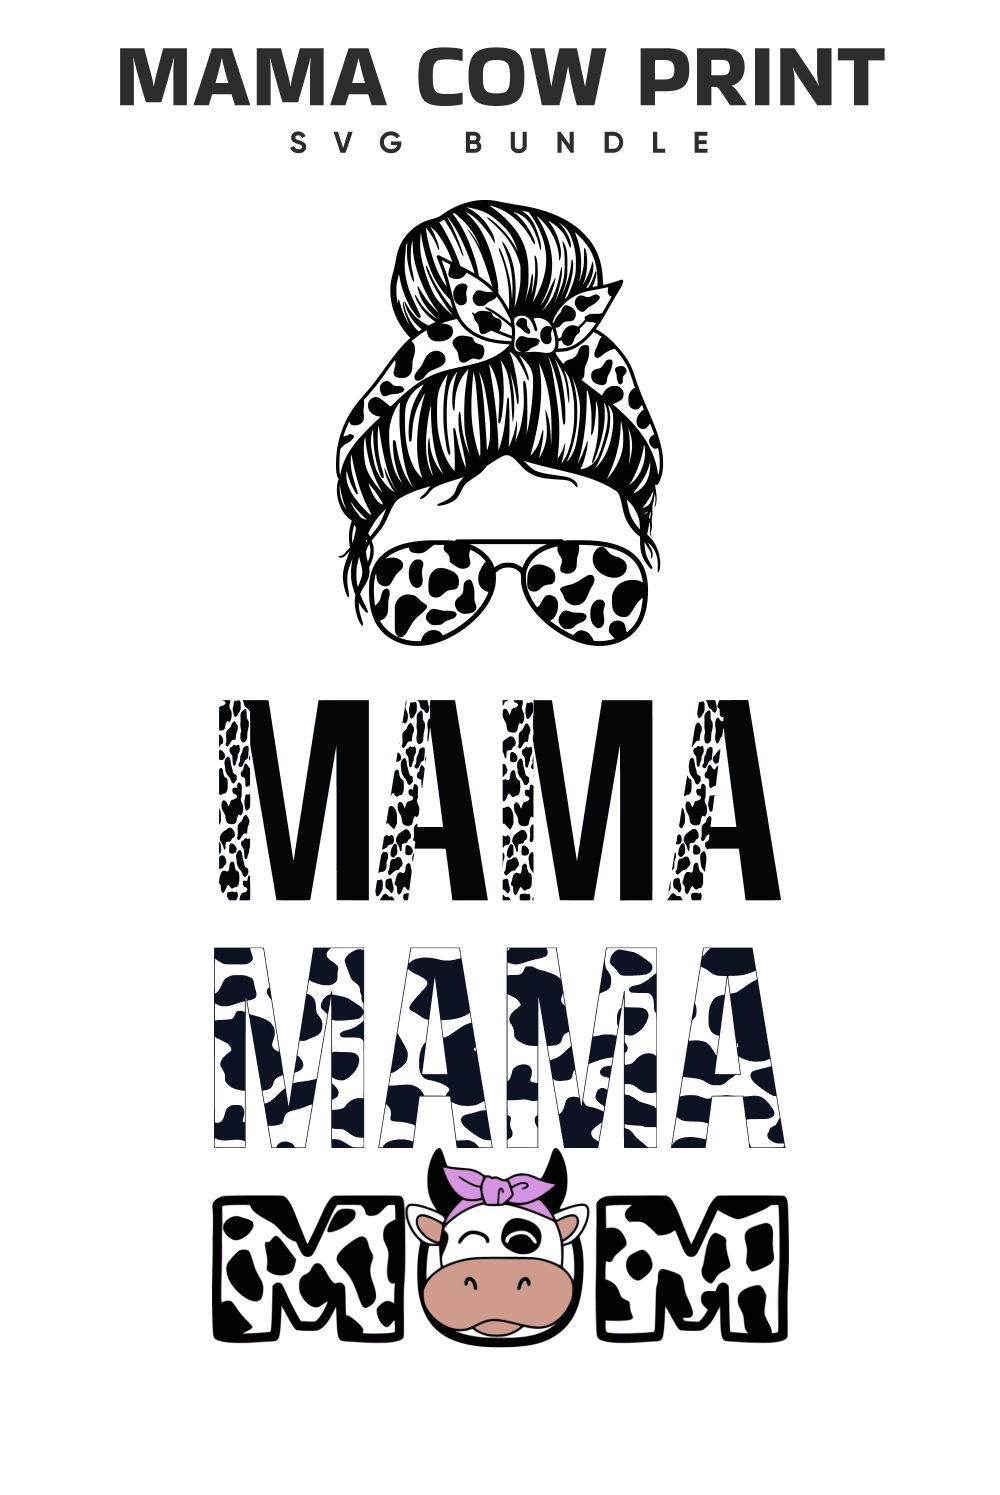 Mama cow print - vinyl wrap